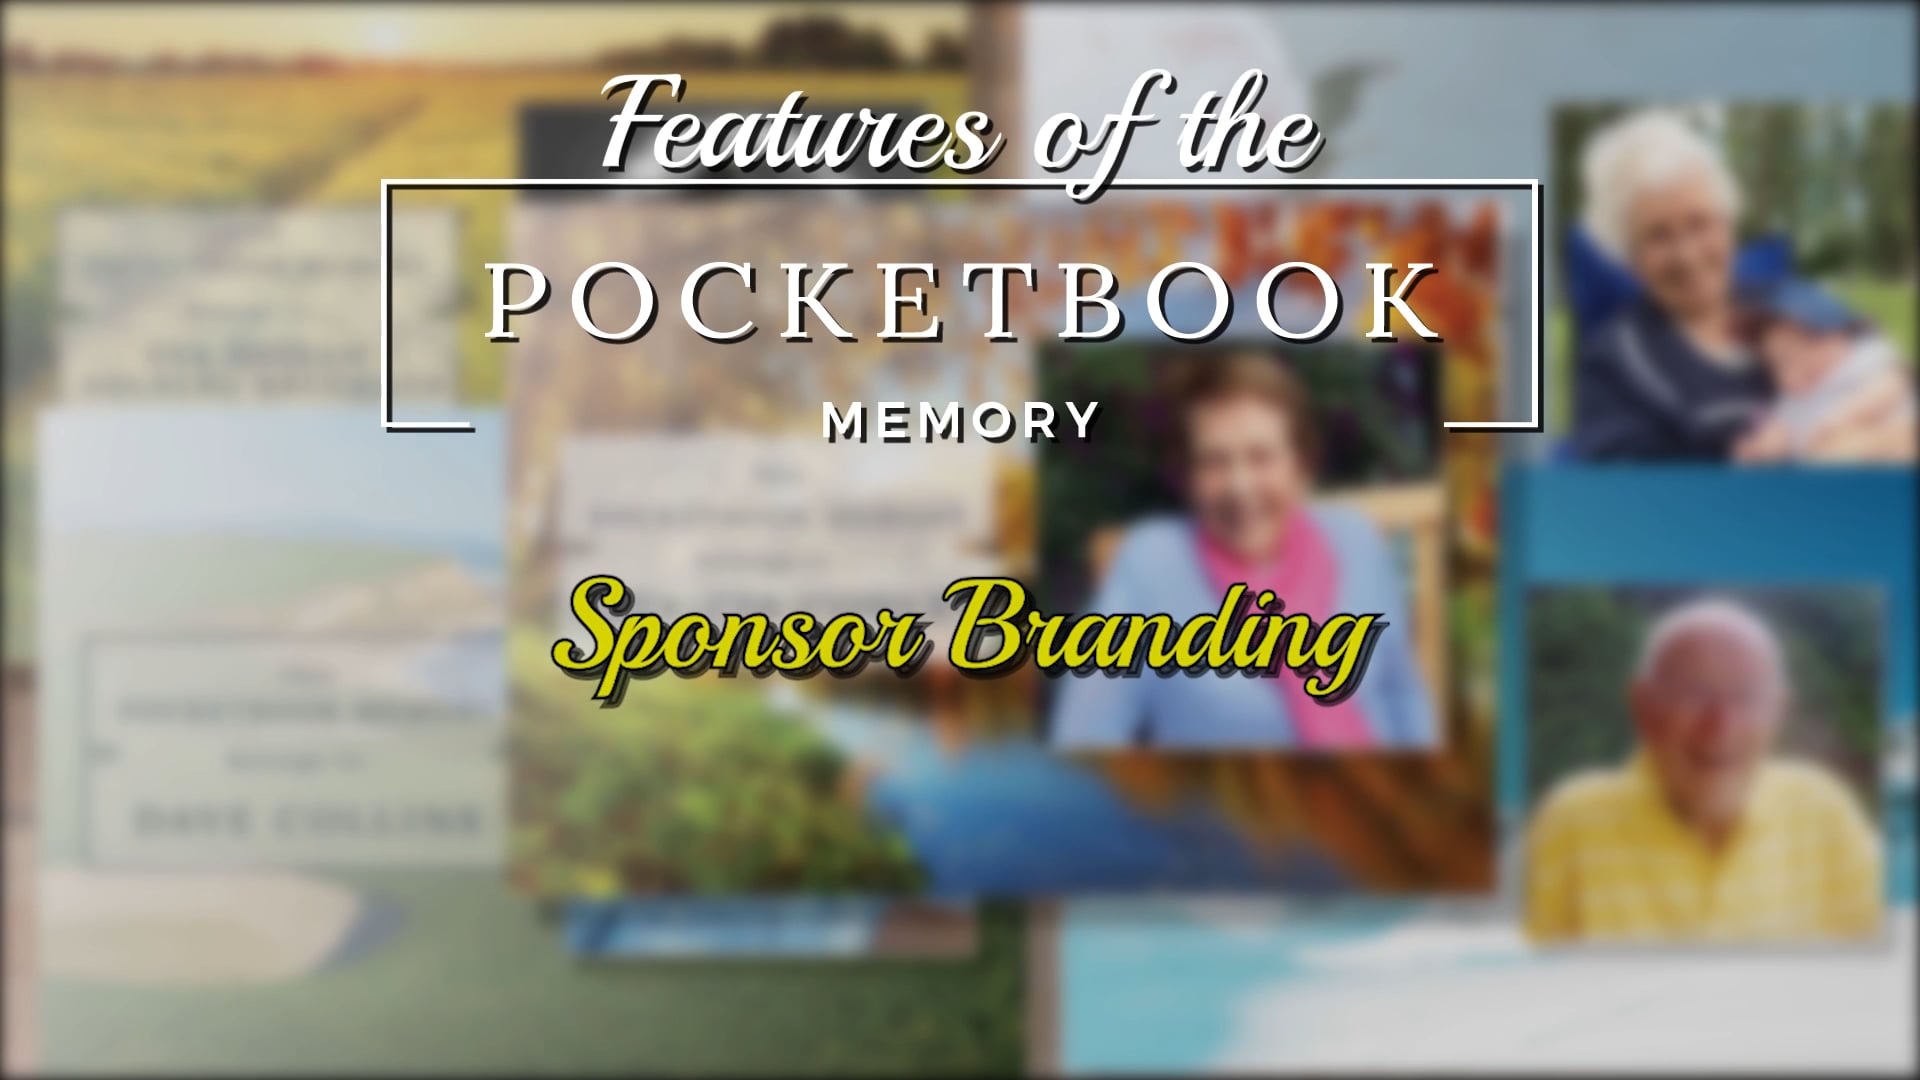 PocketBook Memory Features 'Sponsor Branding'